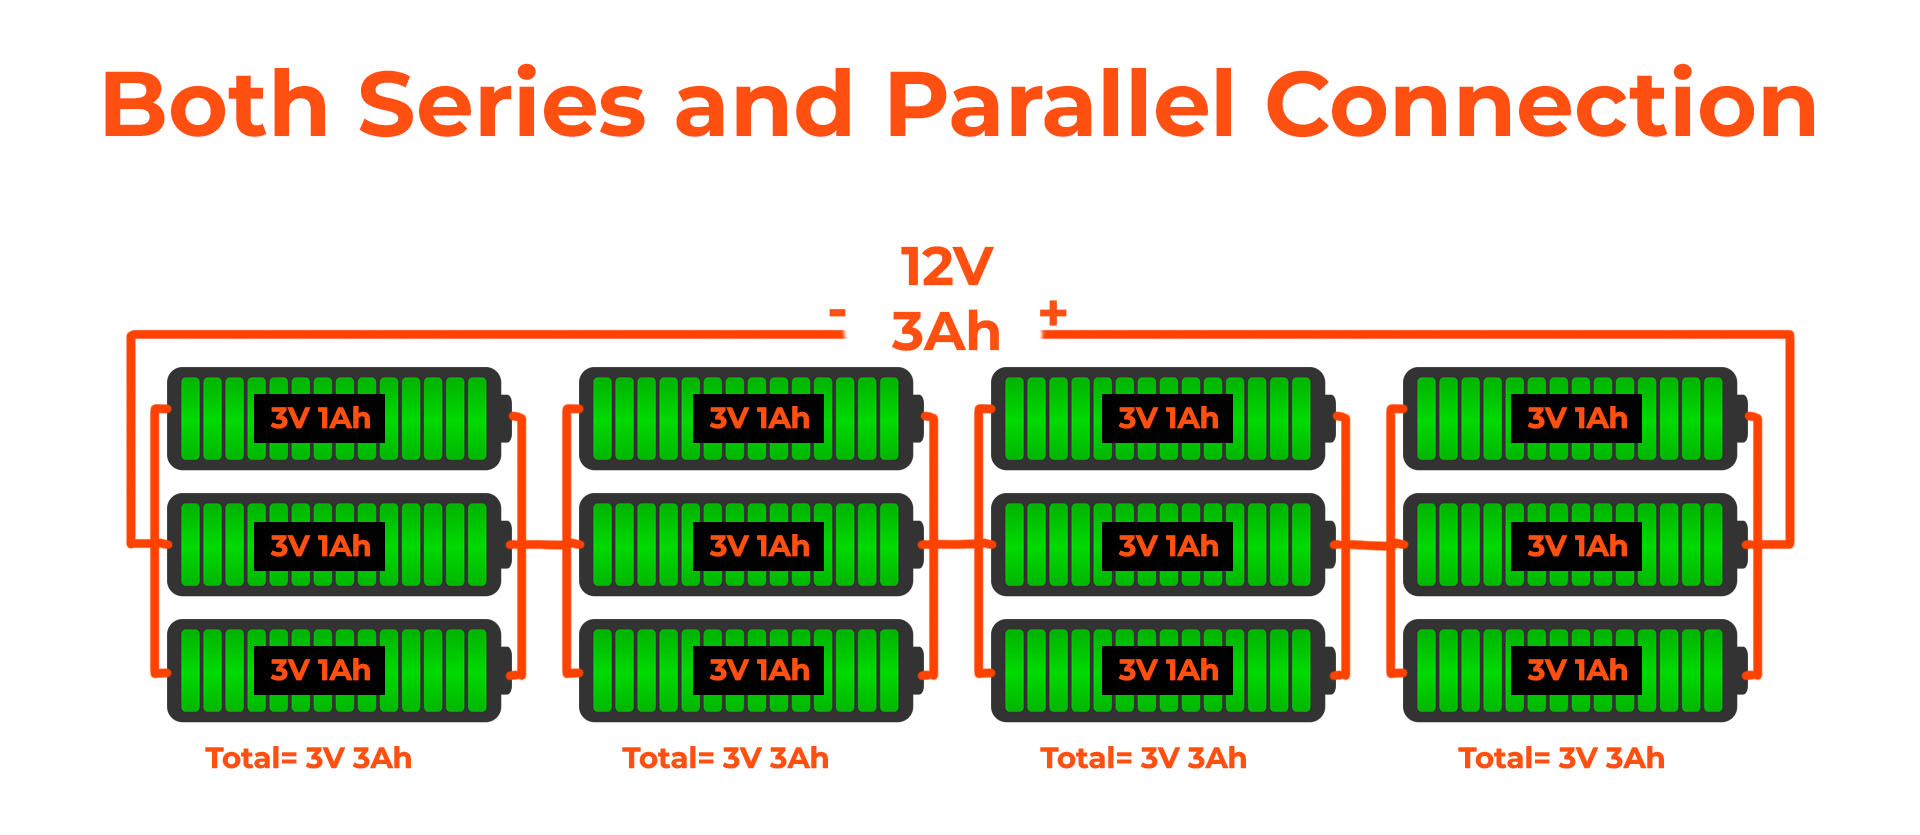 Batteries Series vs Parallel Both